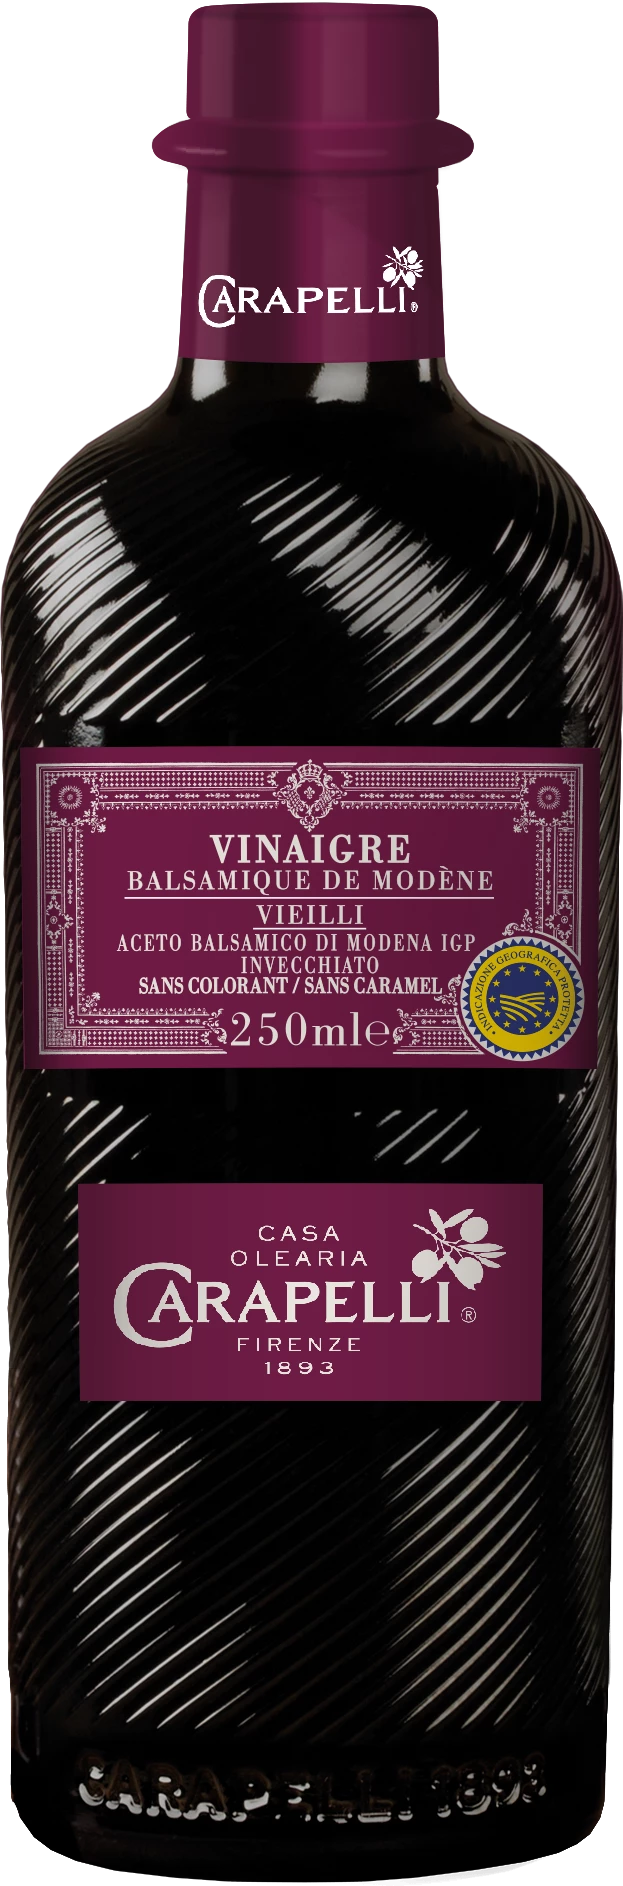 Vinaigre Balsamique de Modéne Vielli, 250ml - CARAPELLI